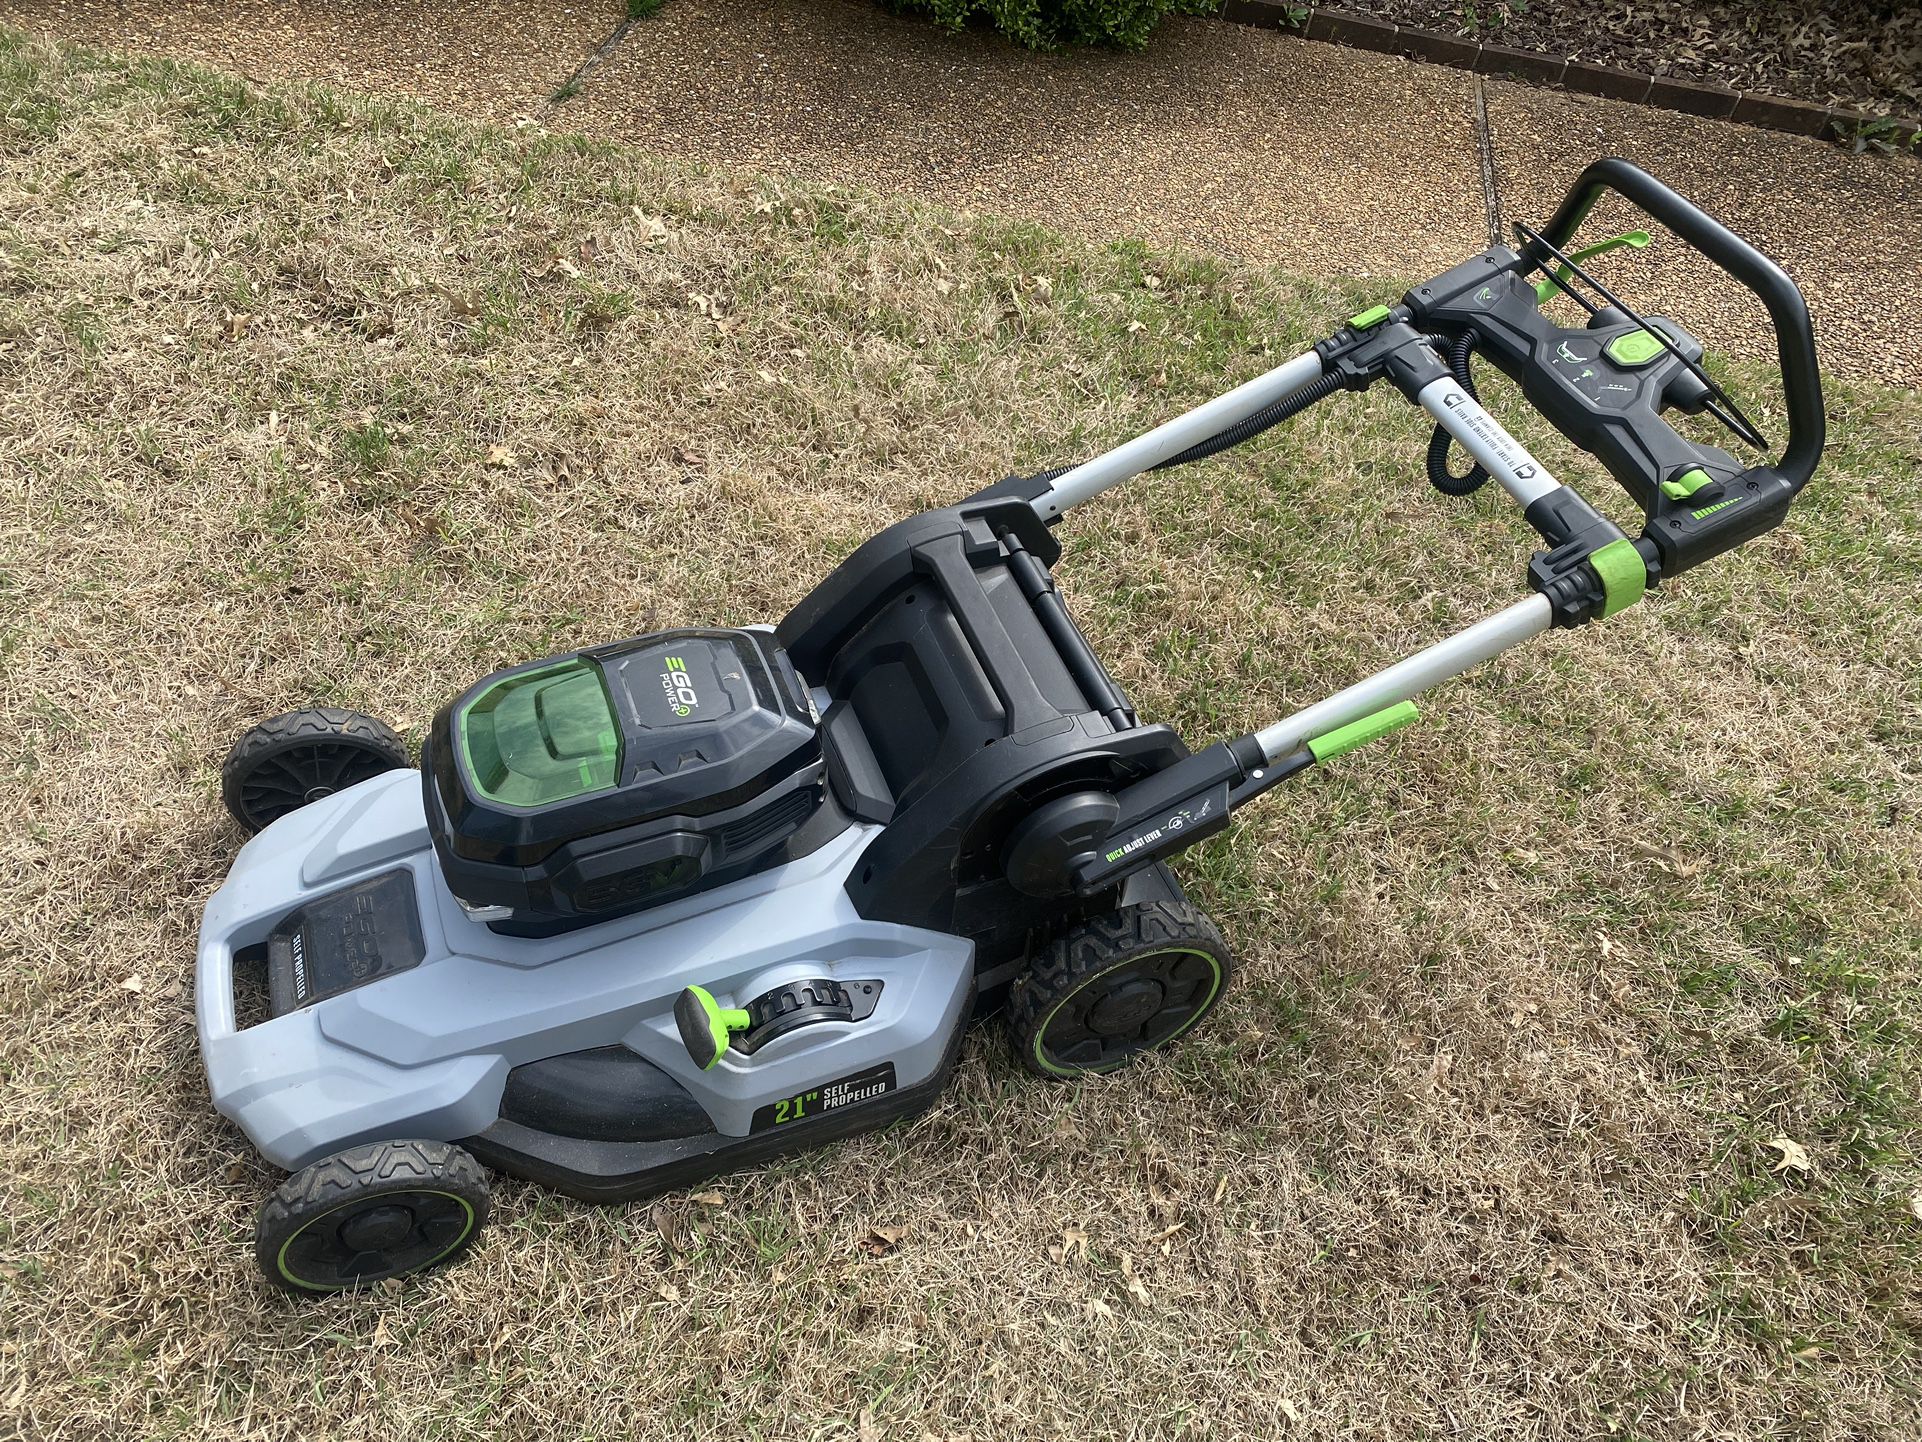 EGO 21" 56V Lithium ION Electric Lawn Mower